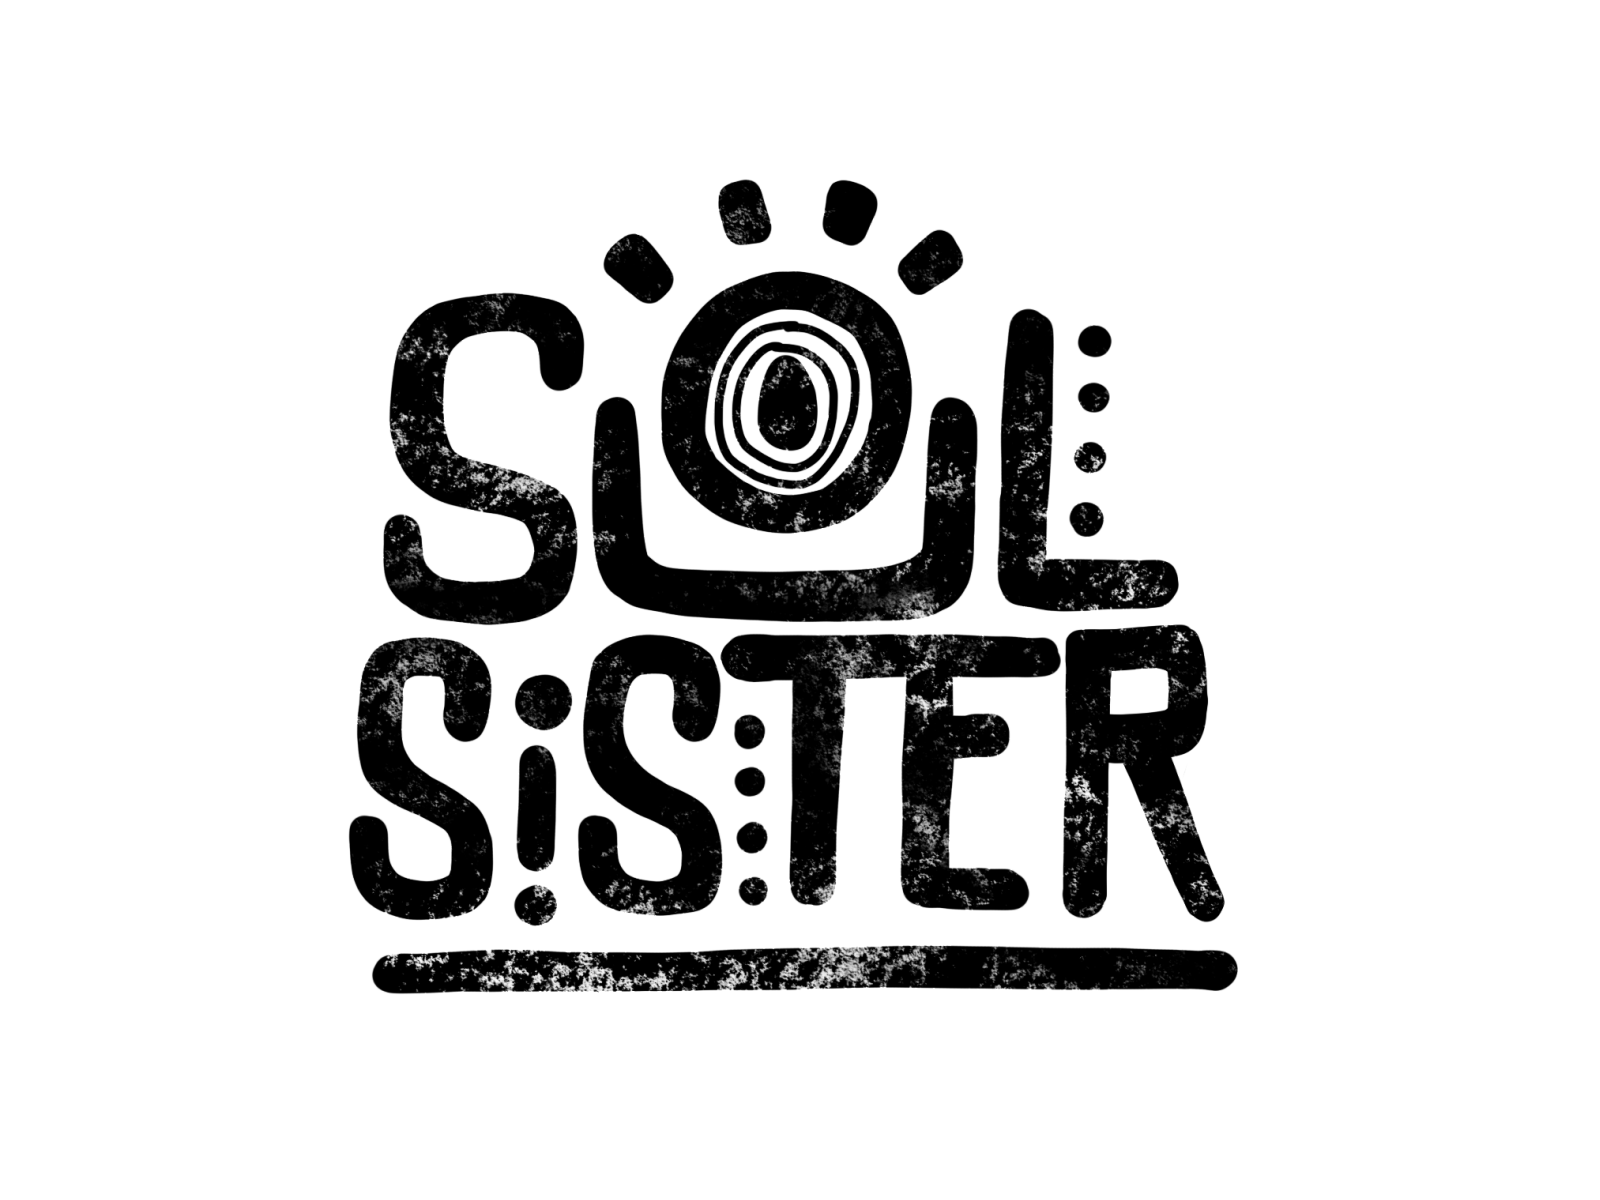 Soul sister by Daniela Santibáñez on Dribbble